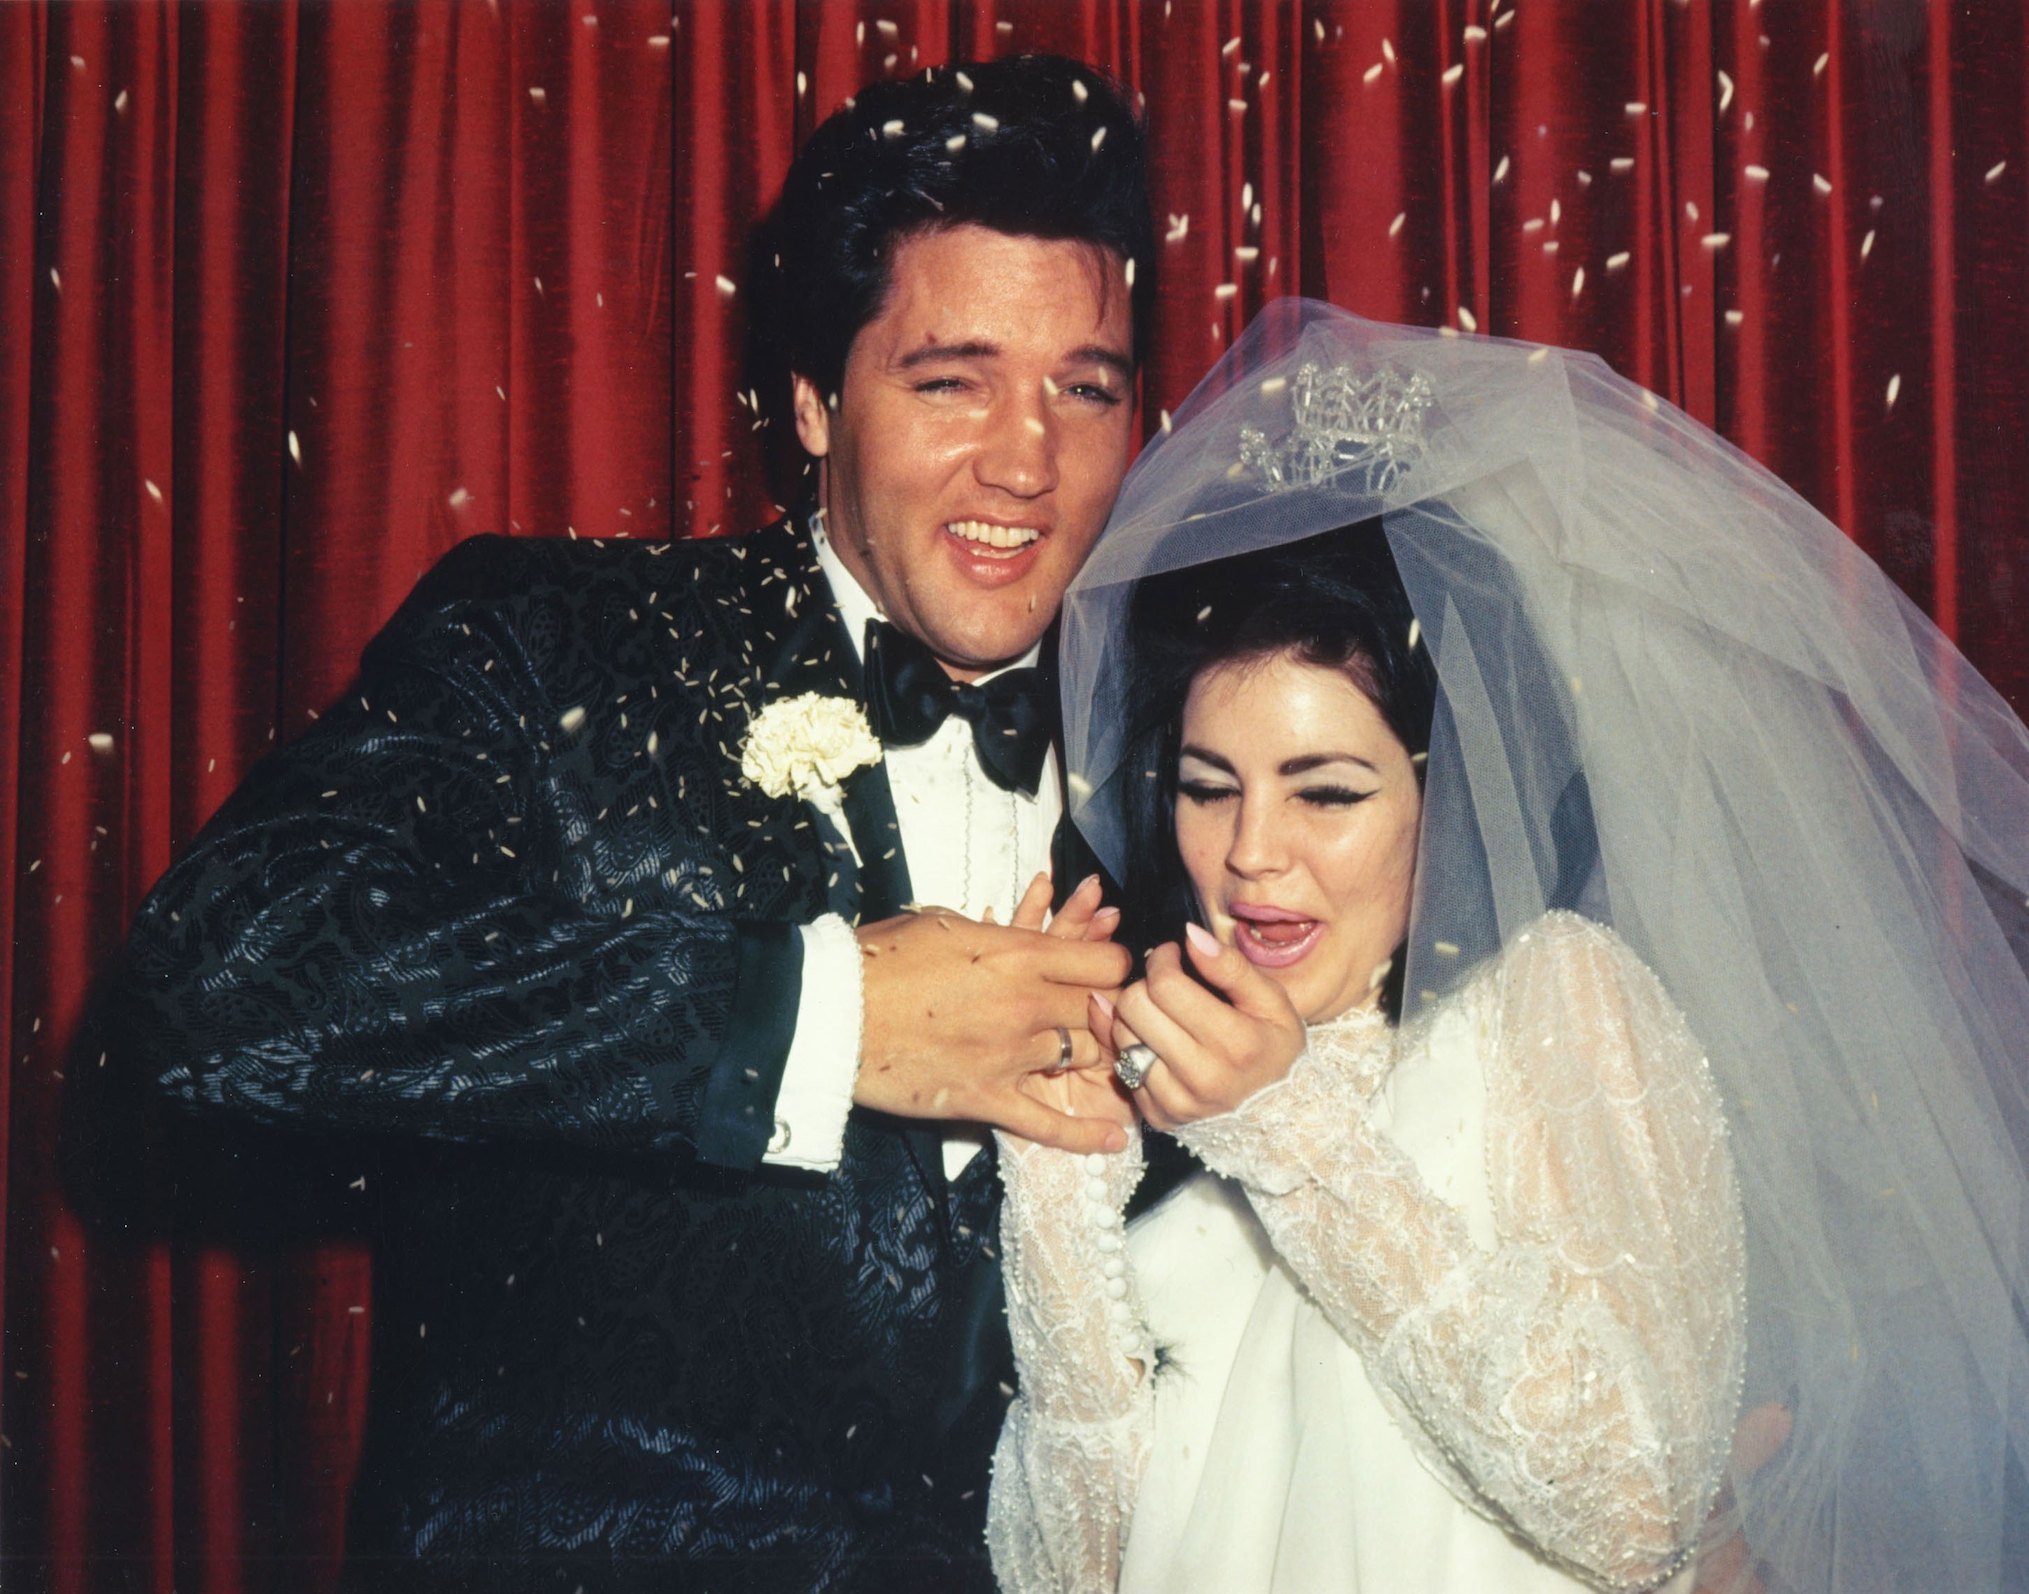 Elvis Presley and Priscilla Presley on their wedding day 